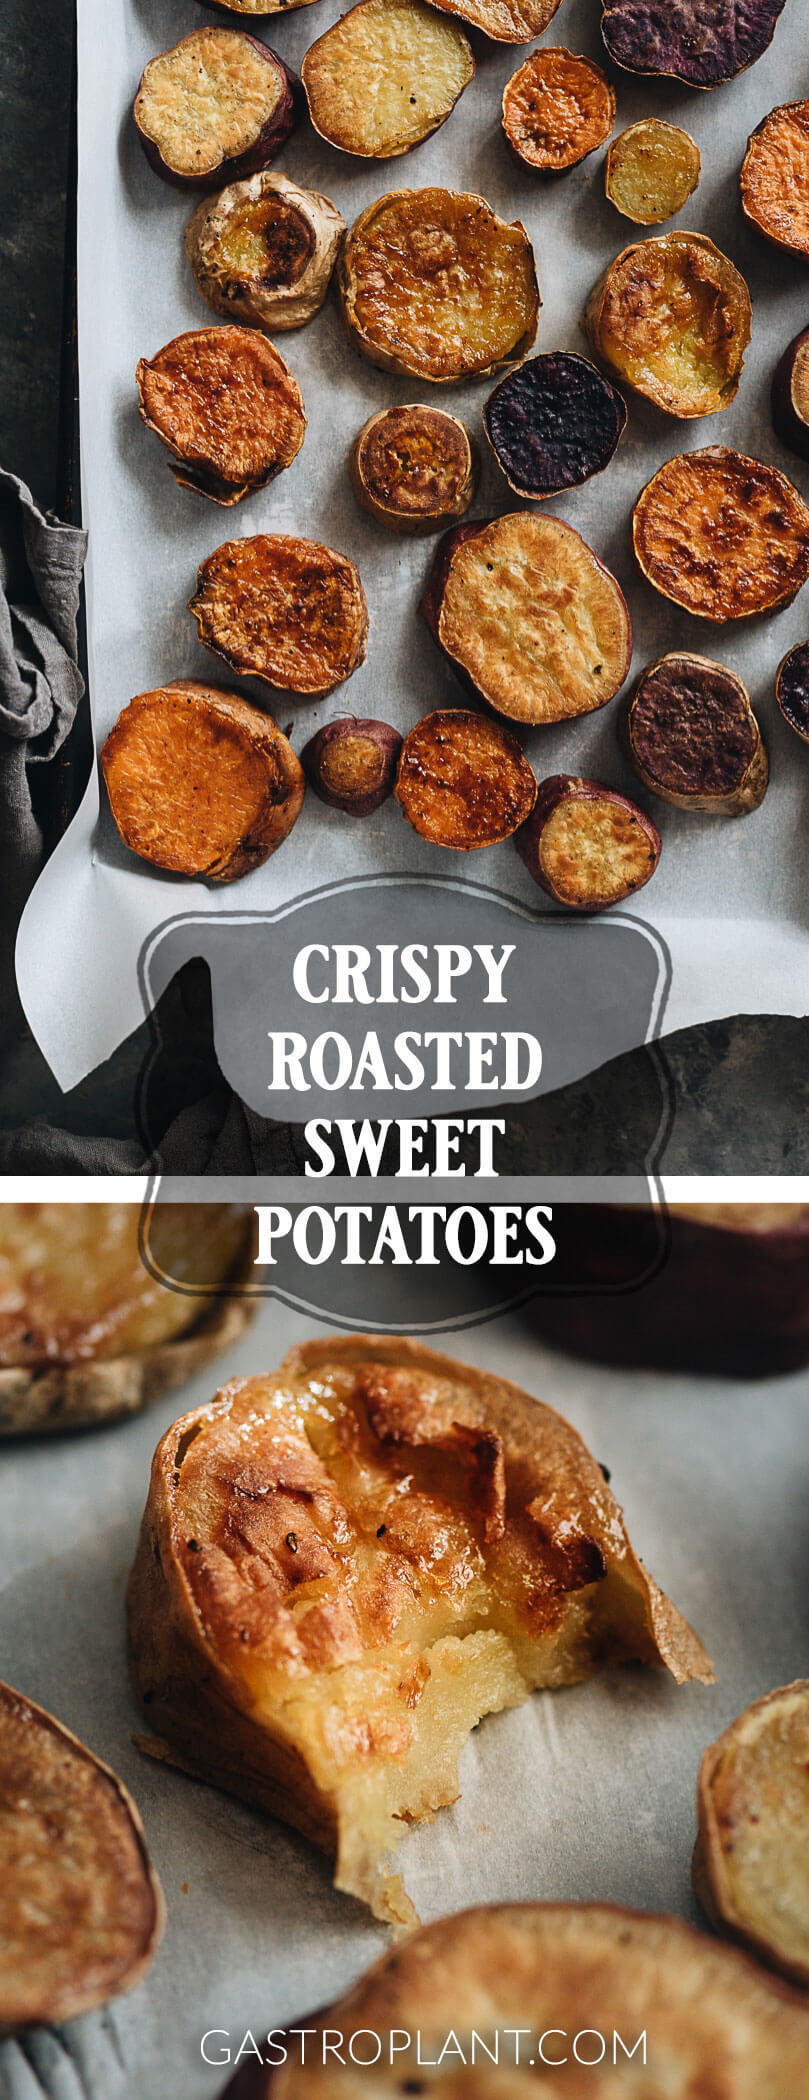 Crispy roasted sweet potatoes collage